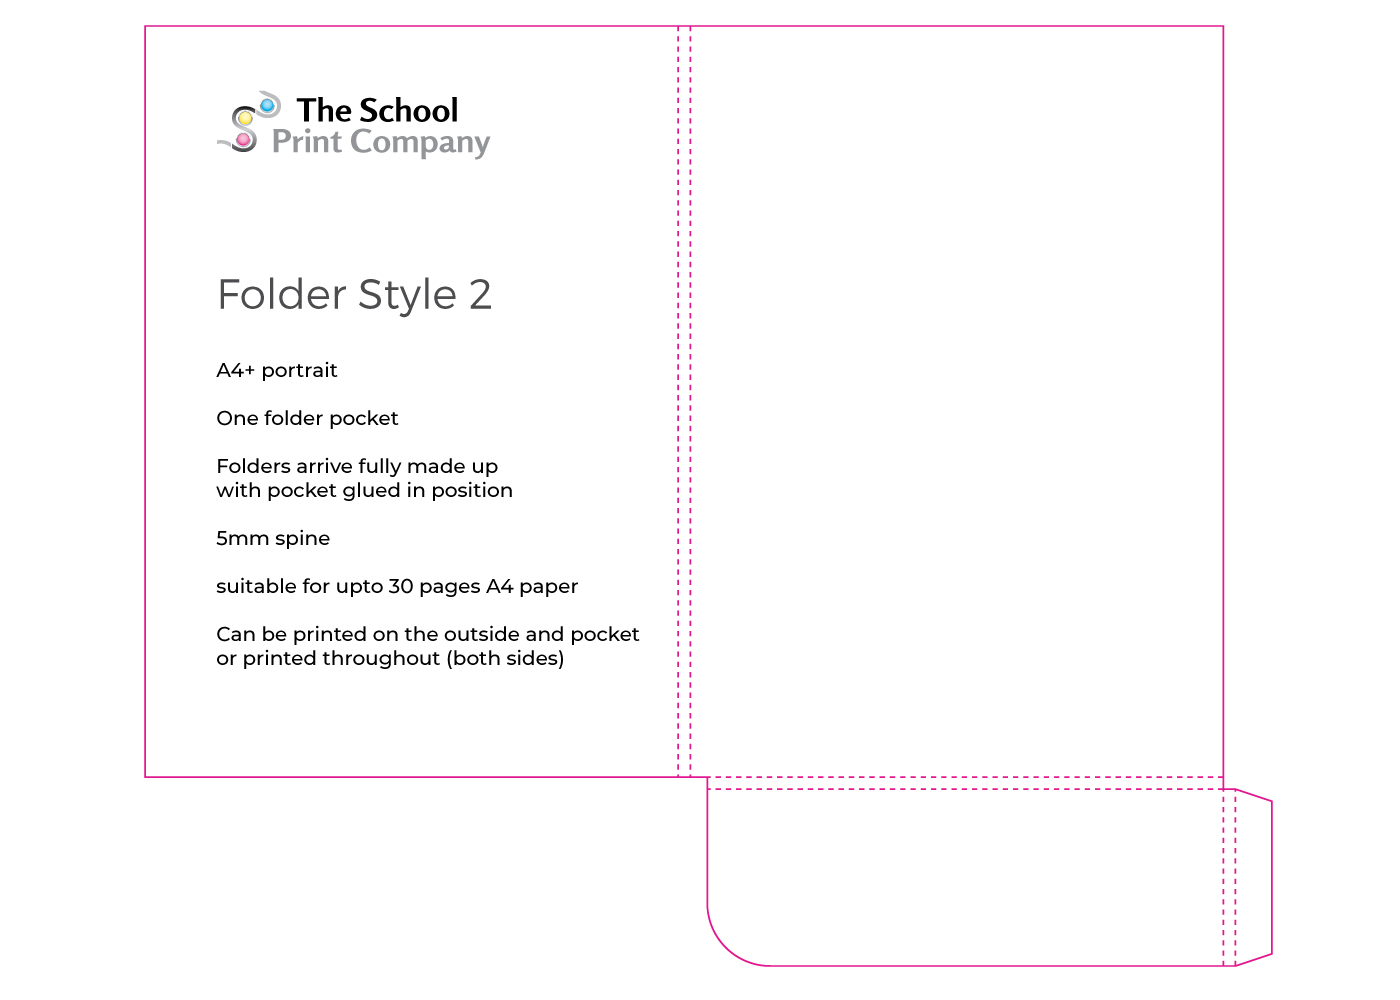  Folder Style 2